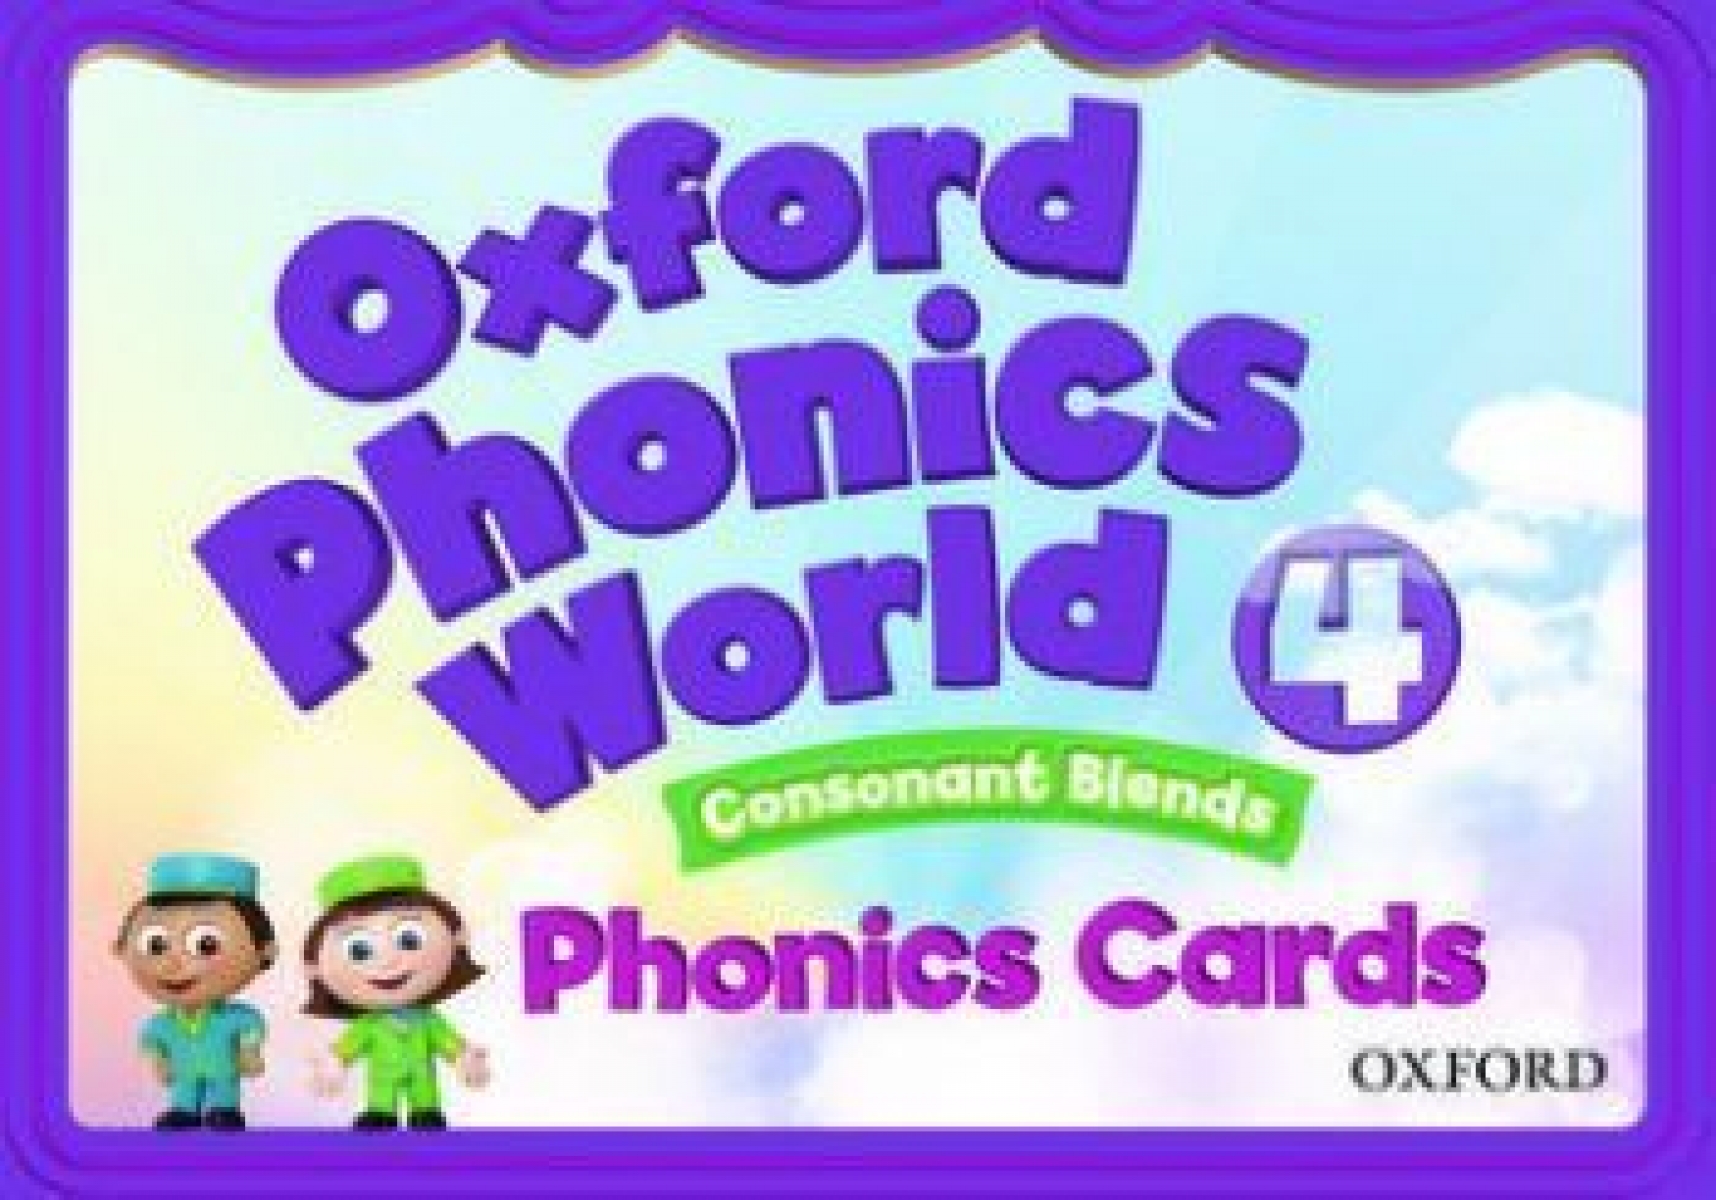 Oxford Phonics World 4